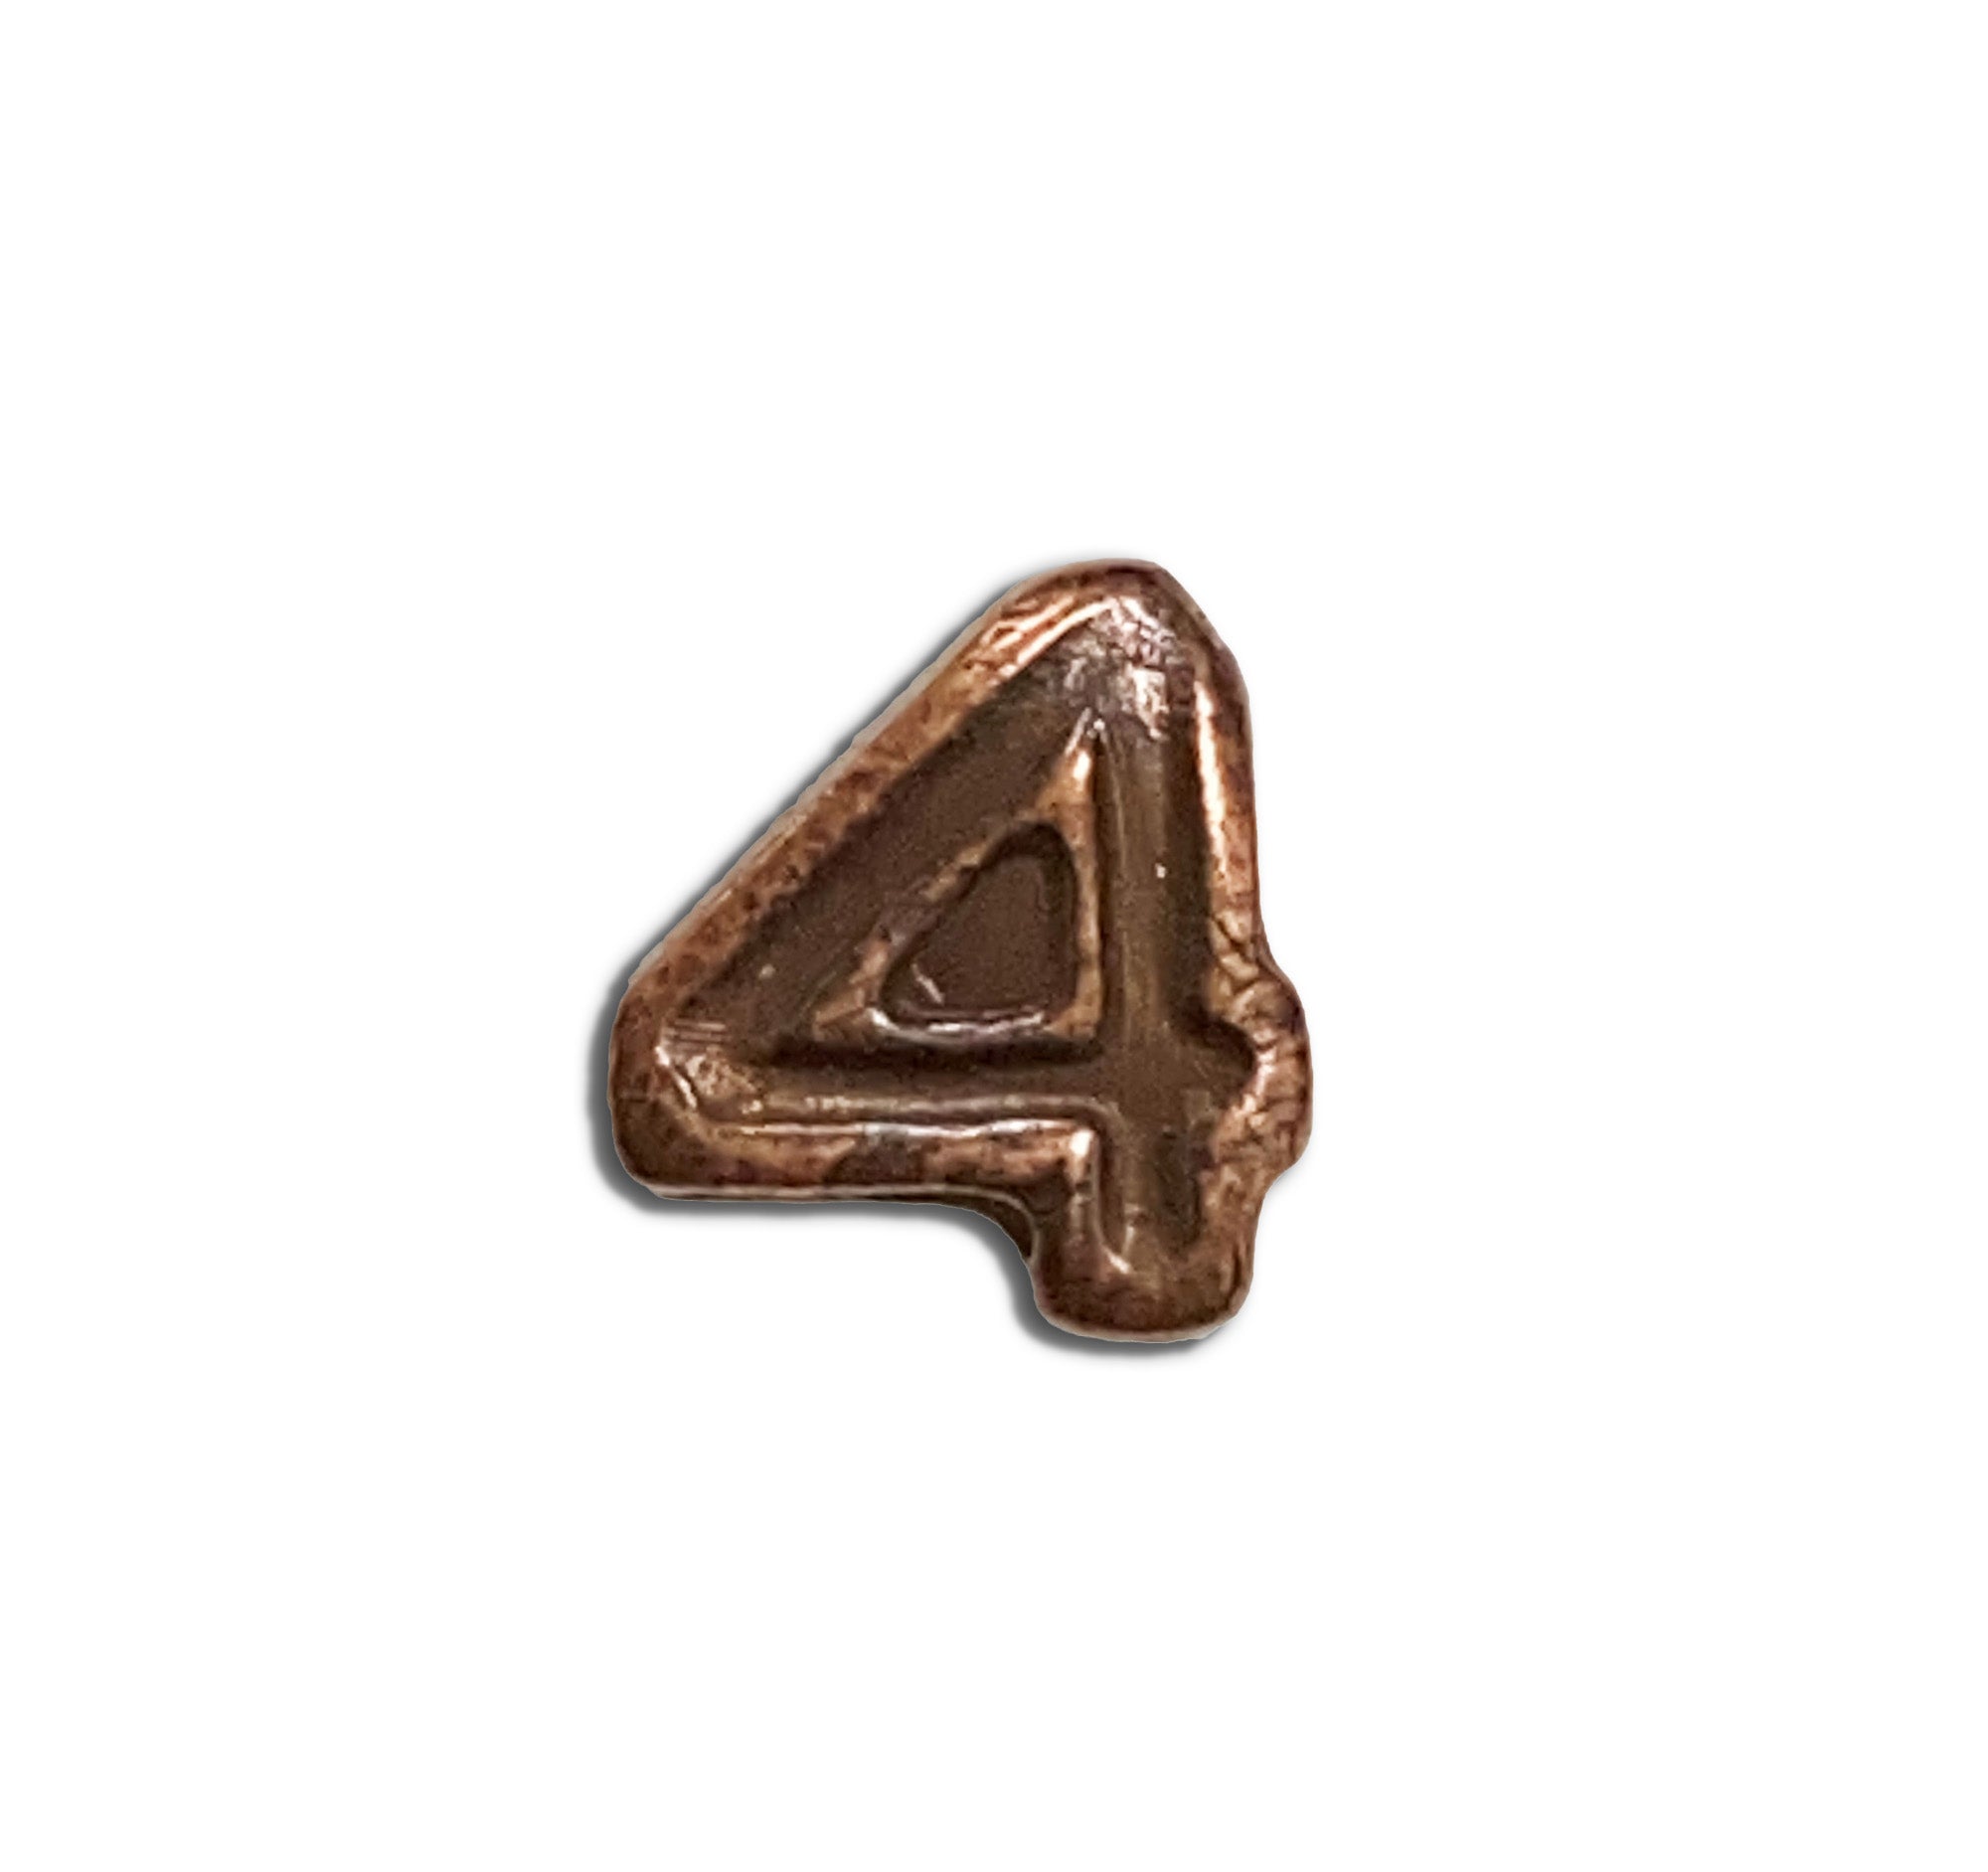 Numeral 4 3/16 in. Bronze Ribbon Device.